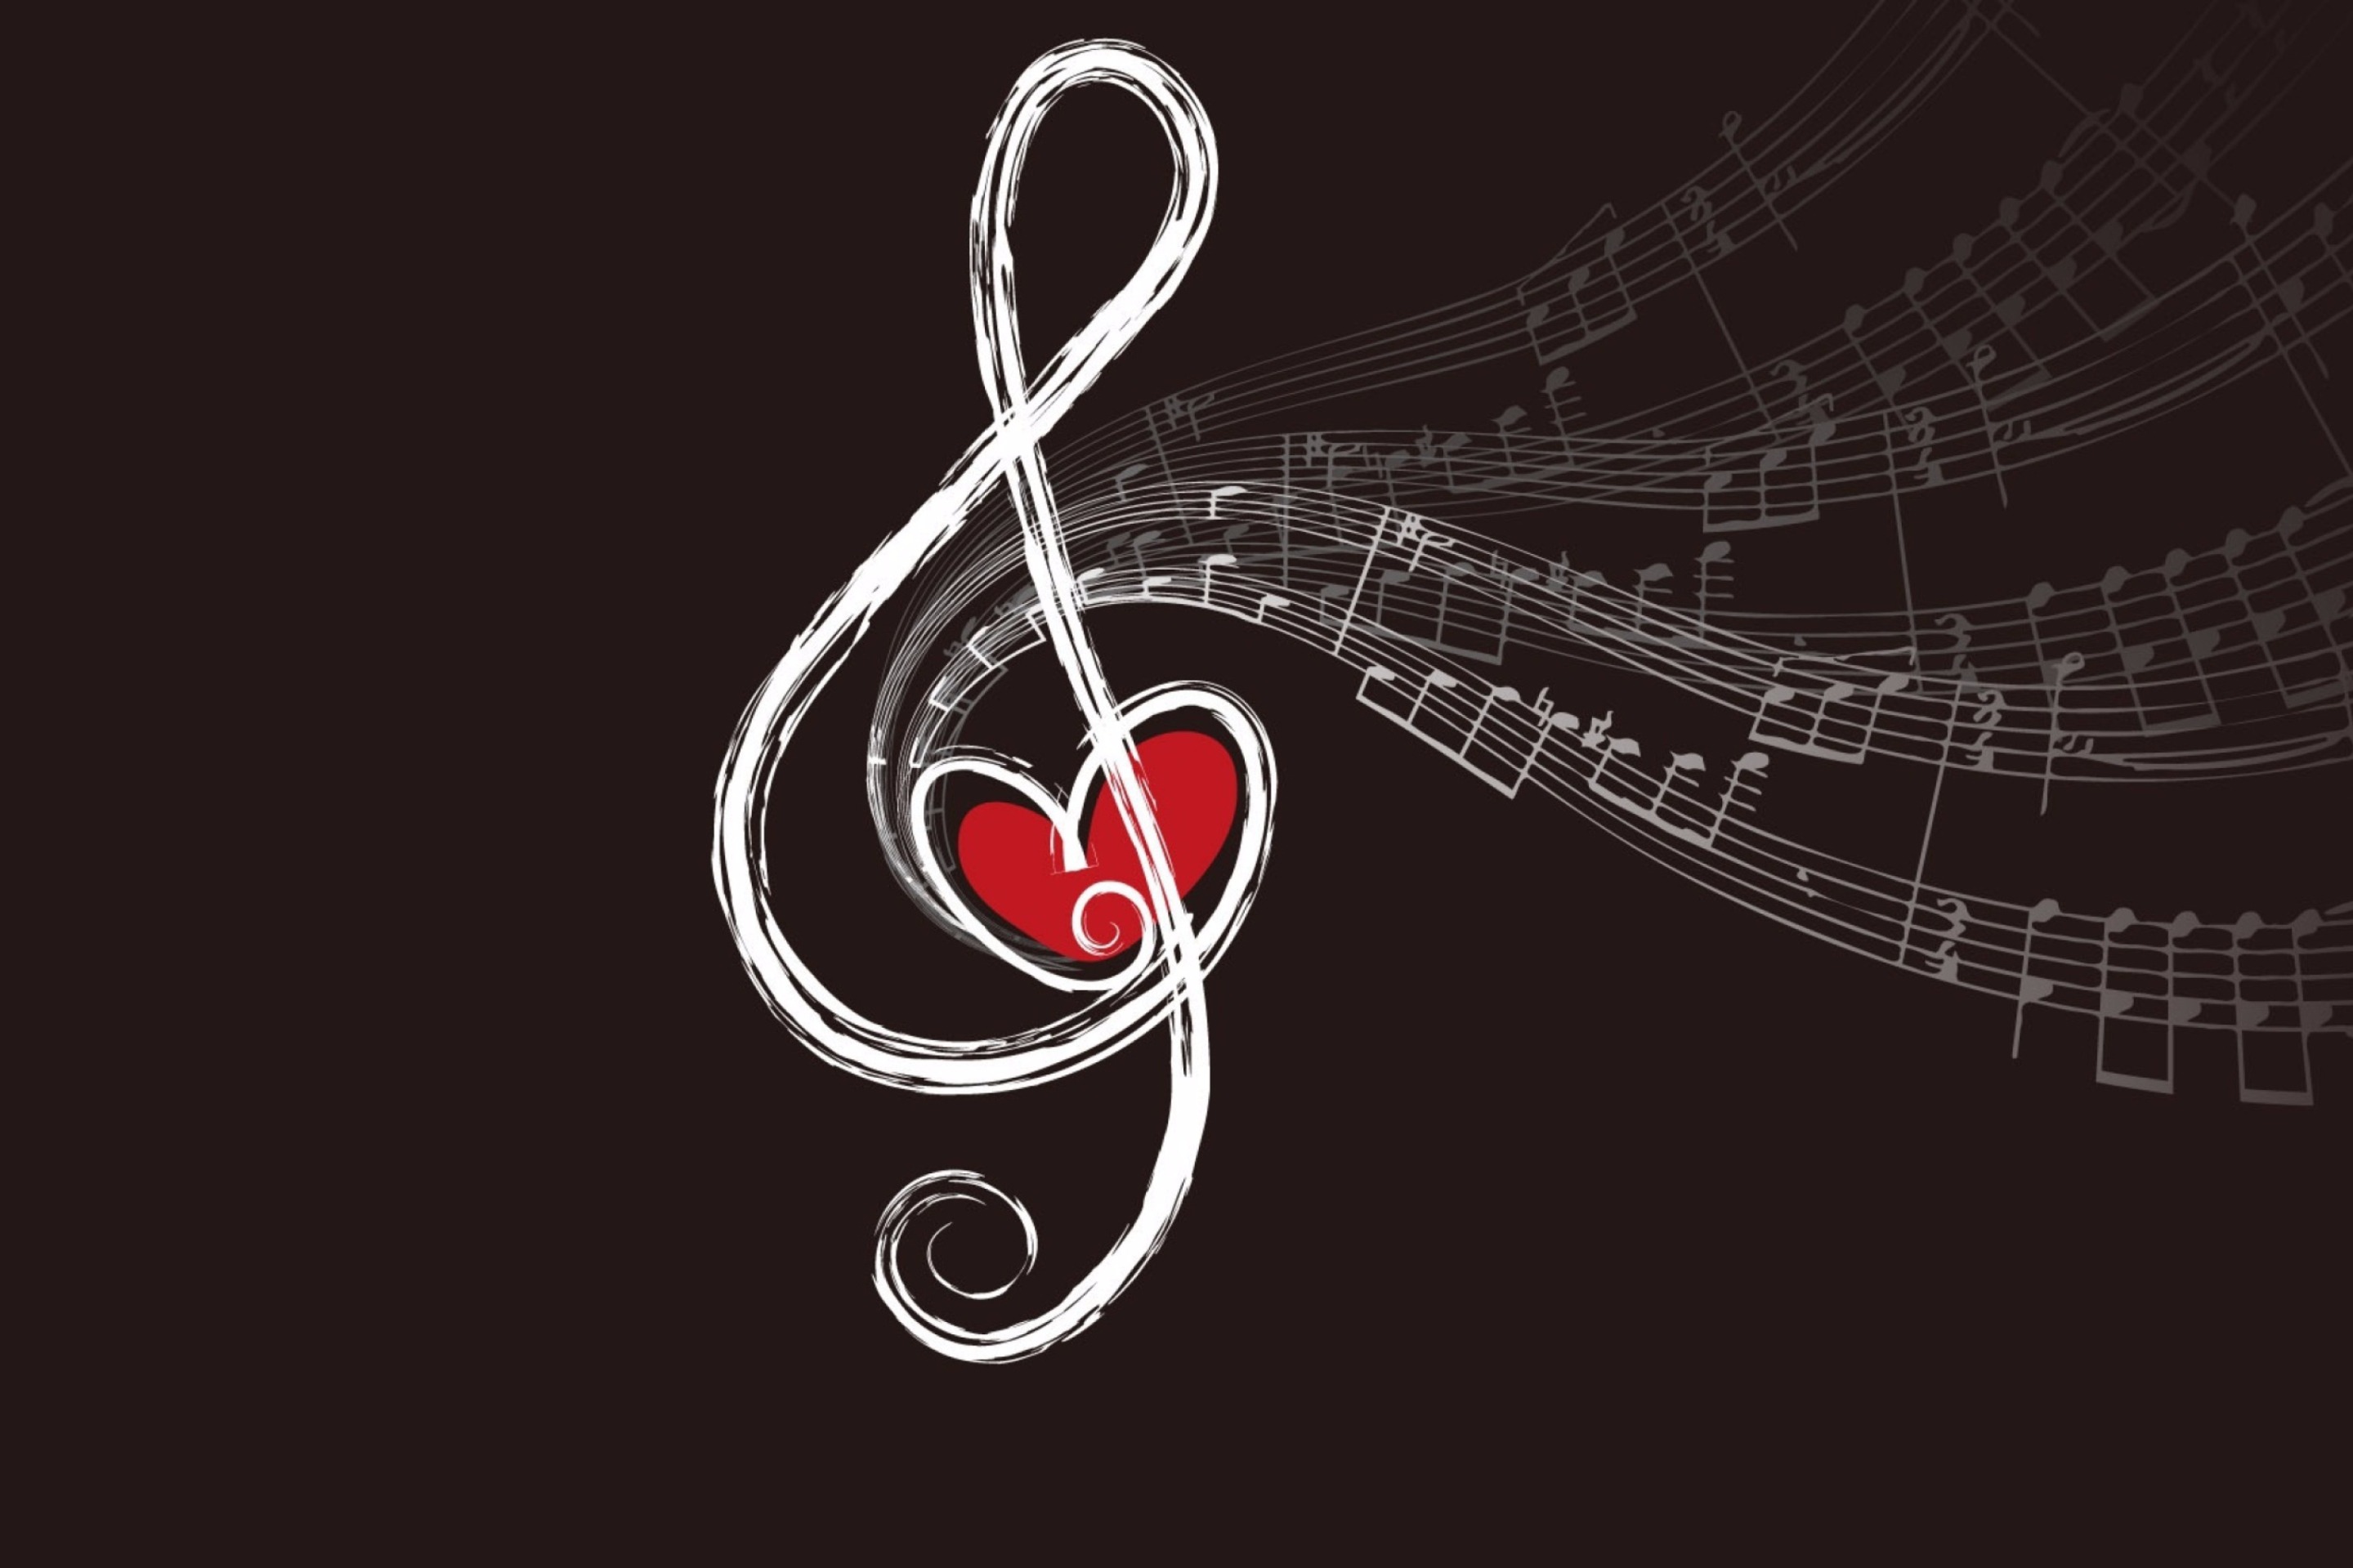 Красивая музыка люблю люблю люблю